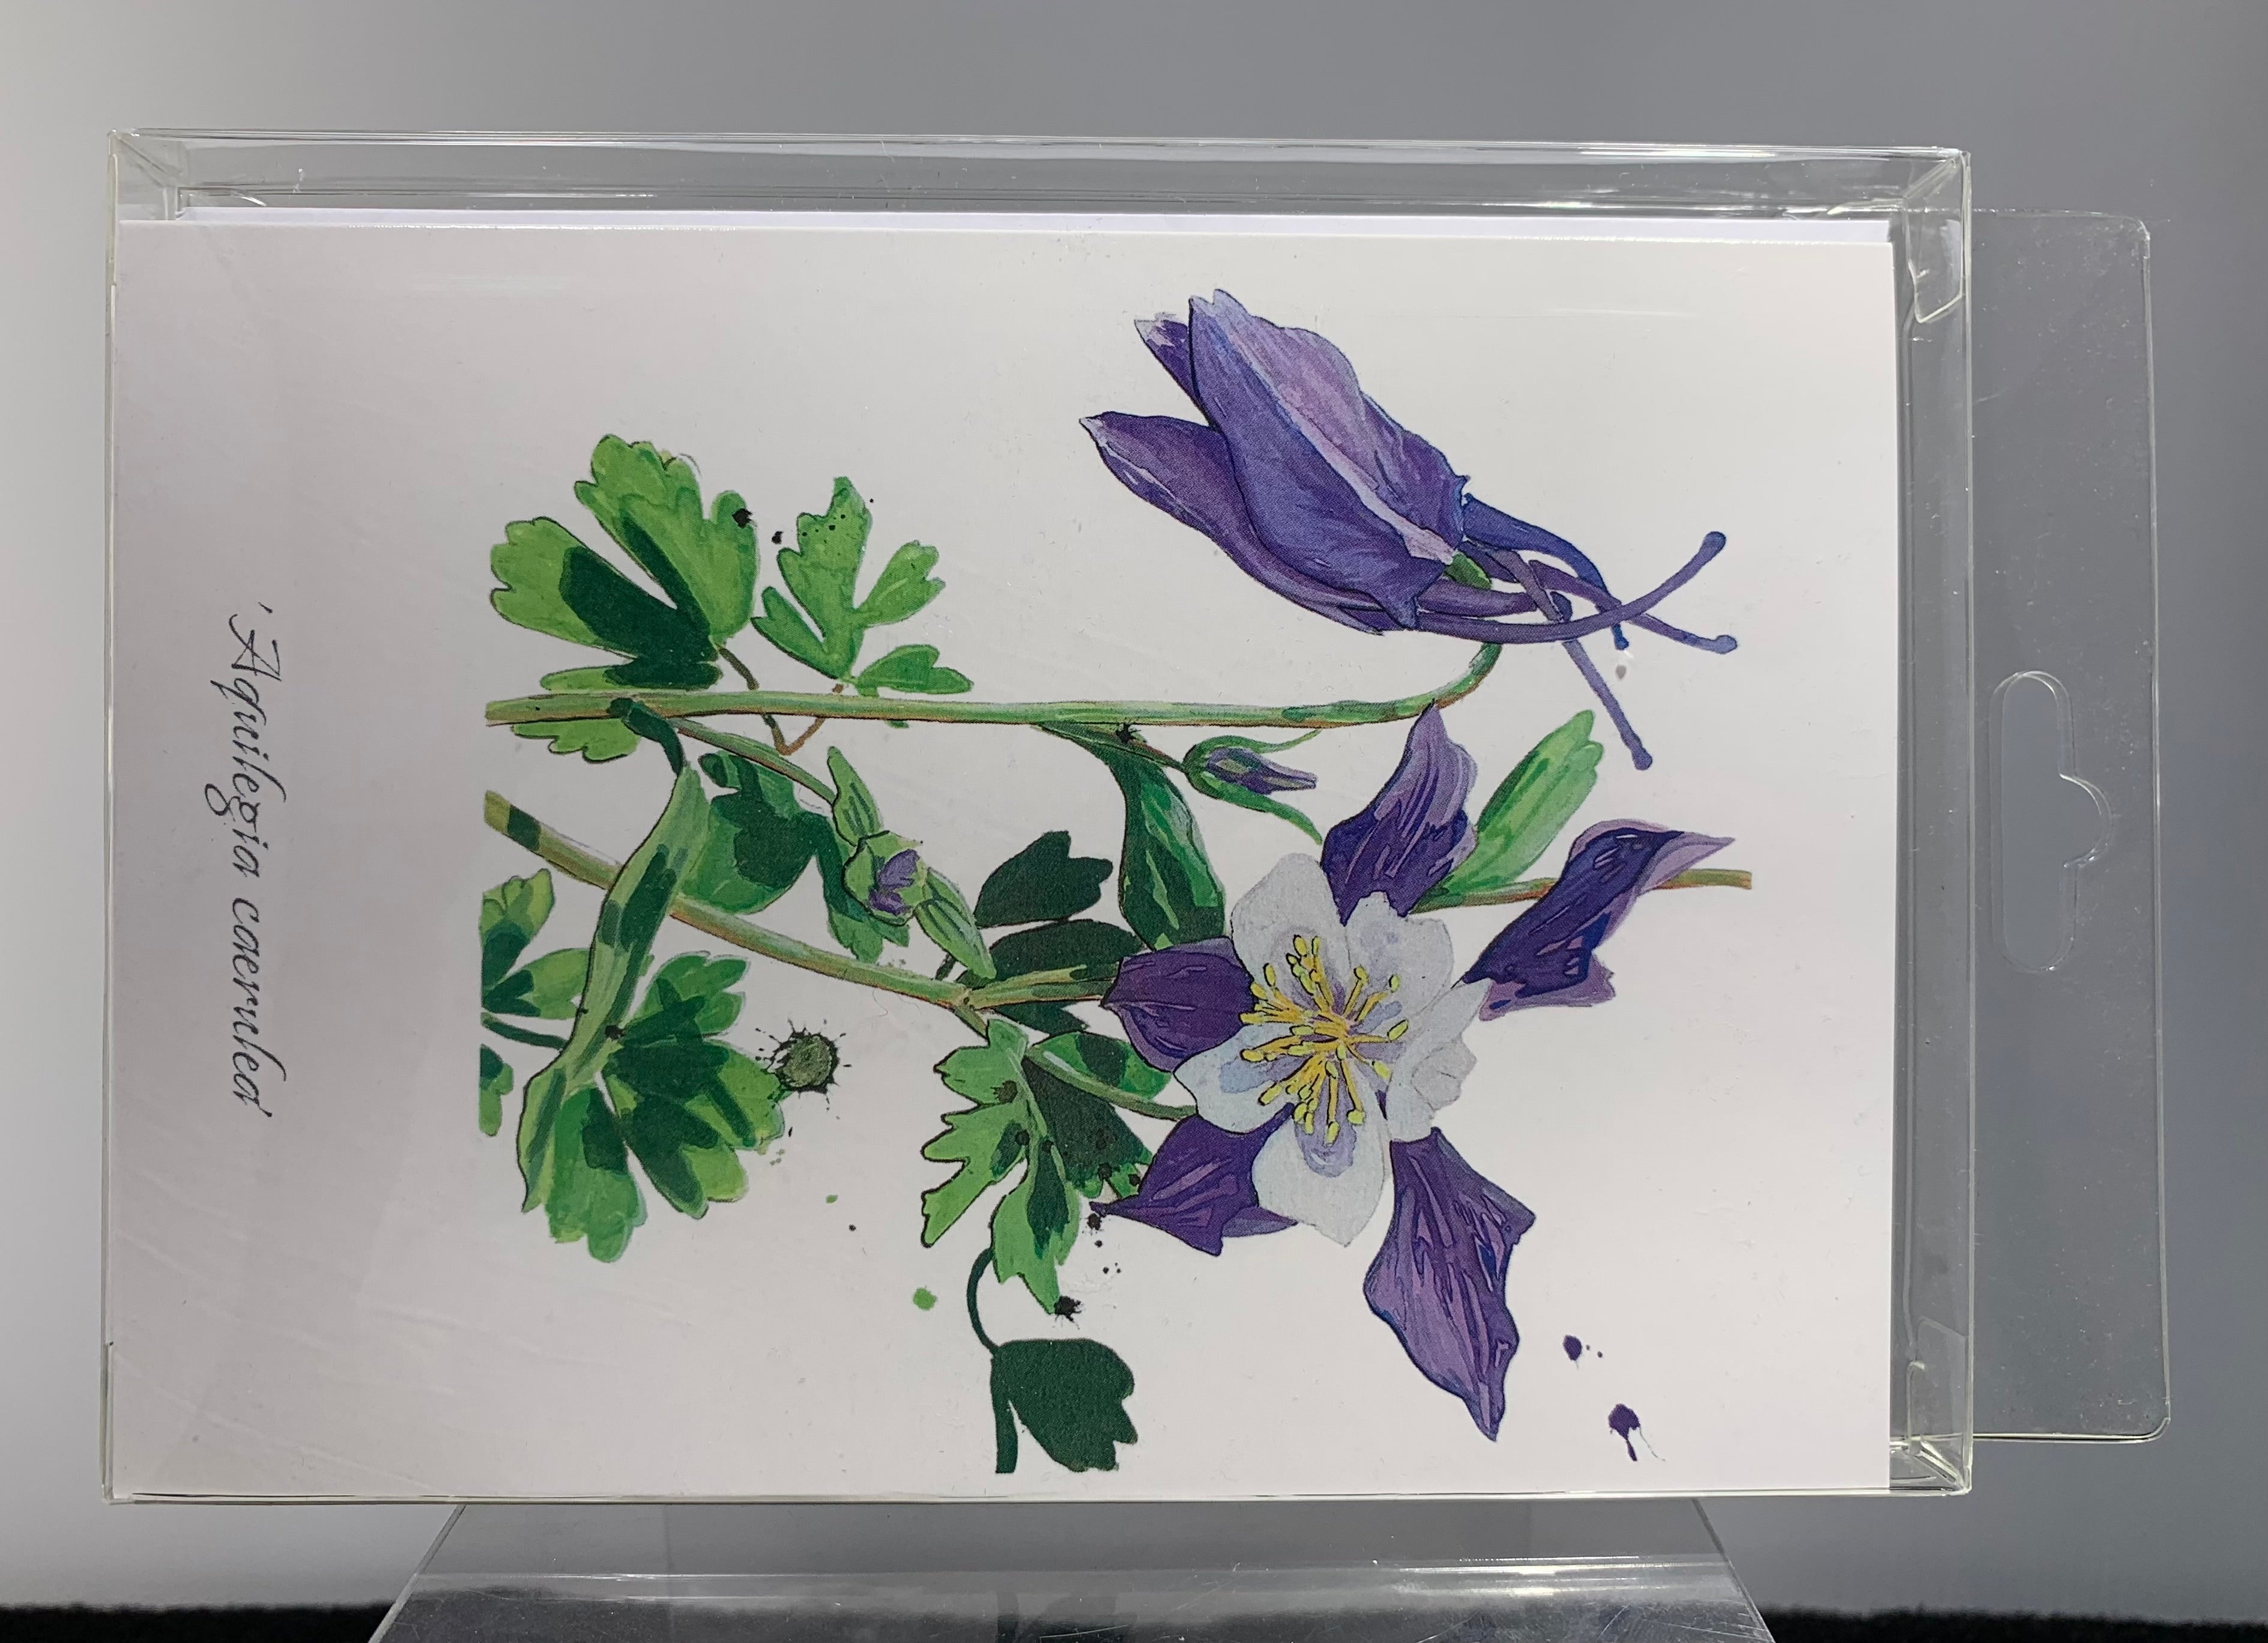 CARDS-4 SET ART CARDS -- "Colorado Wildflowers Series #2" FREE SHIPPING